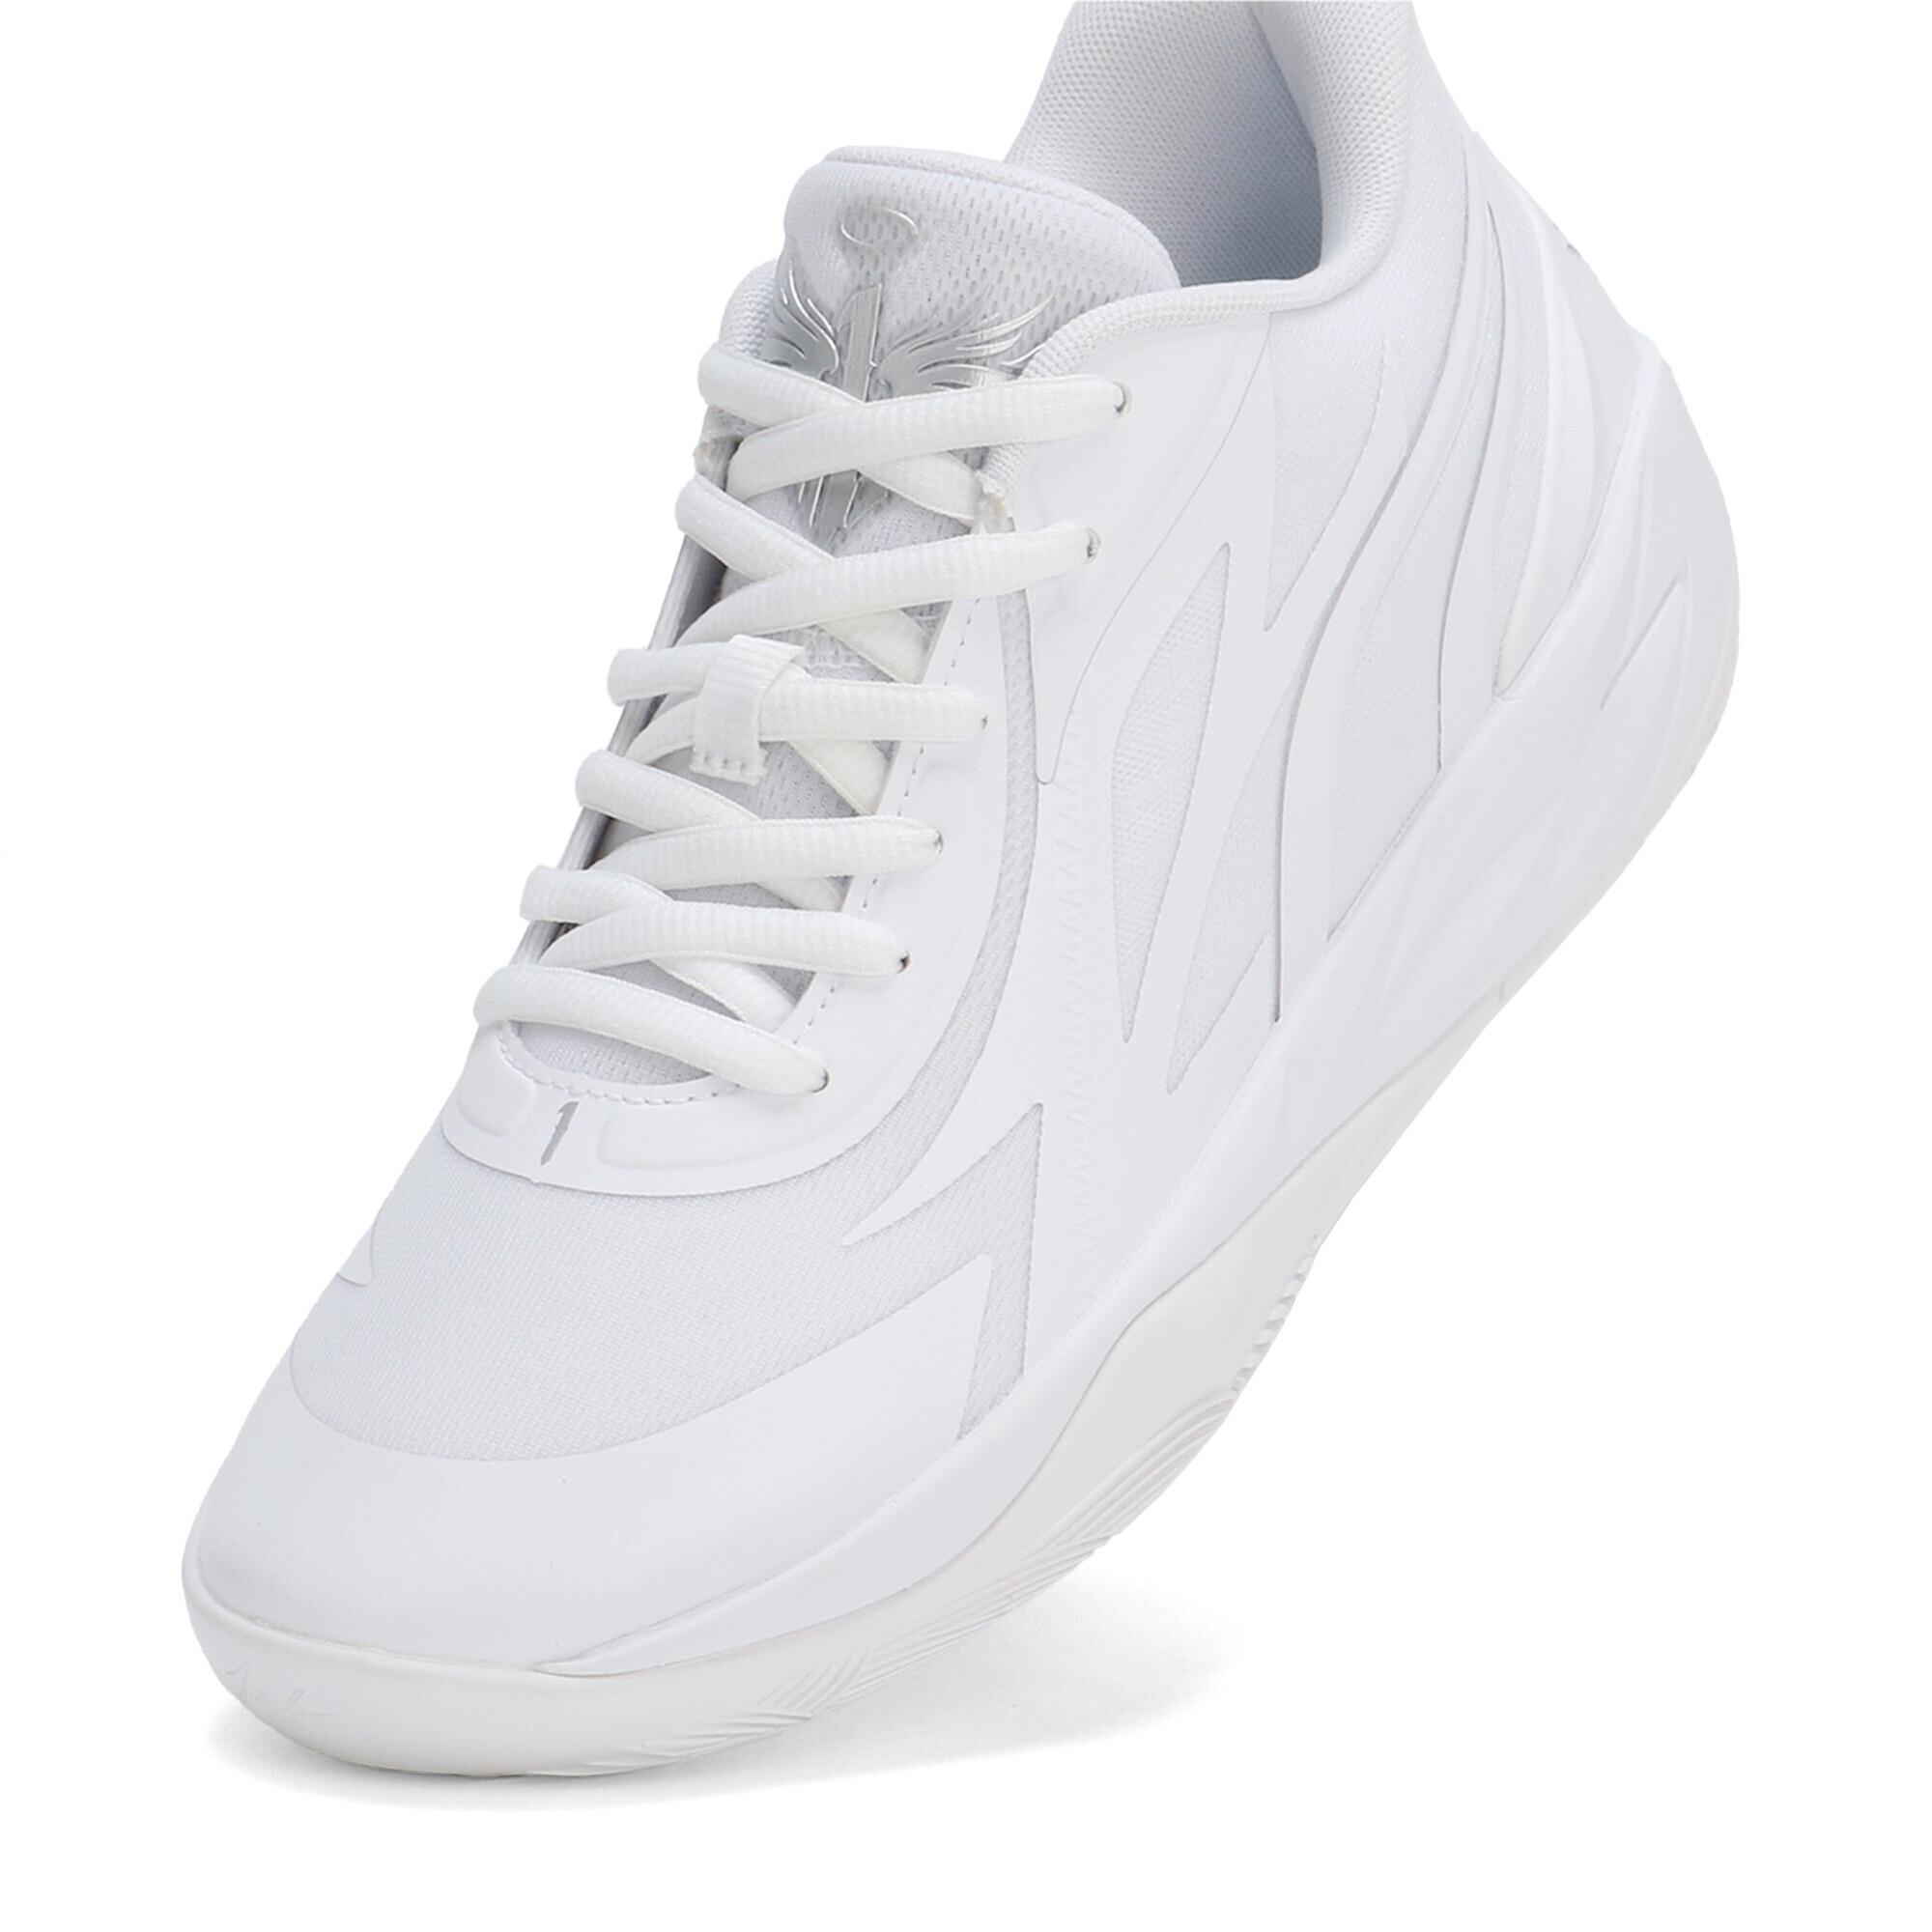 Men's PUMA MB.02 Lo Basketball Shoes In White/Silver, Size EU 43